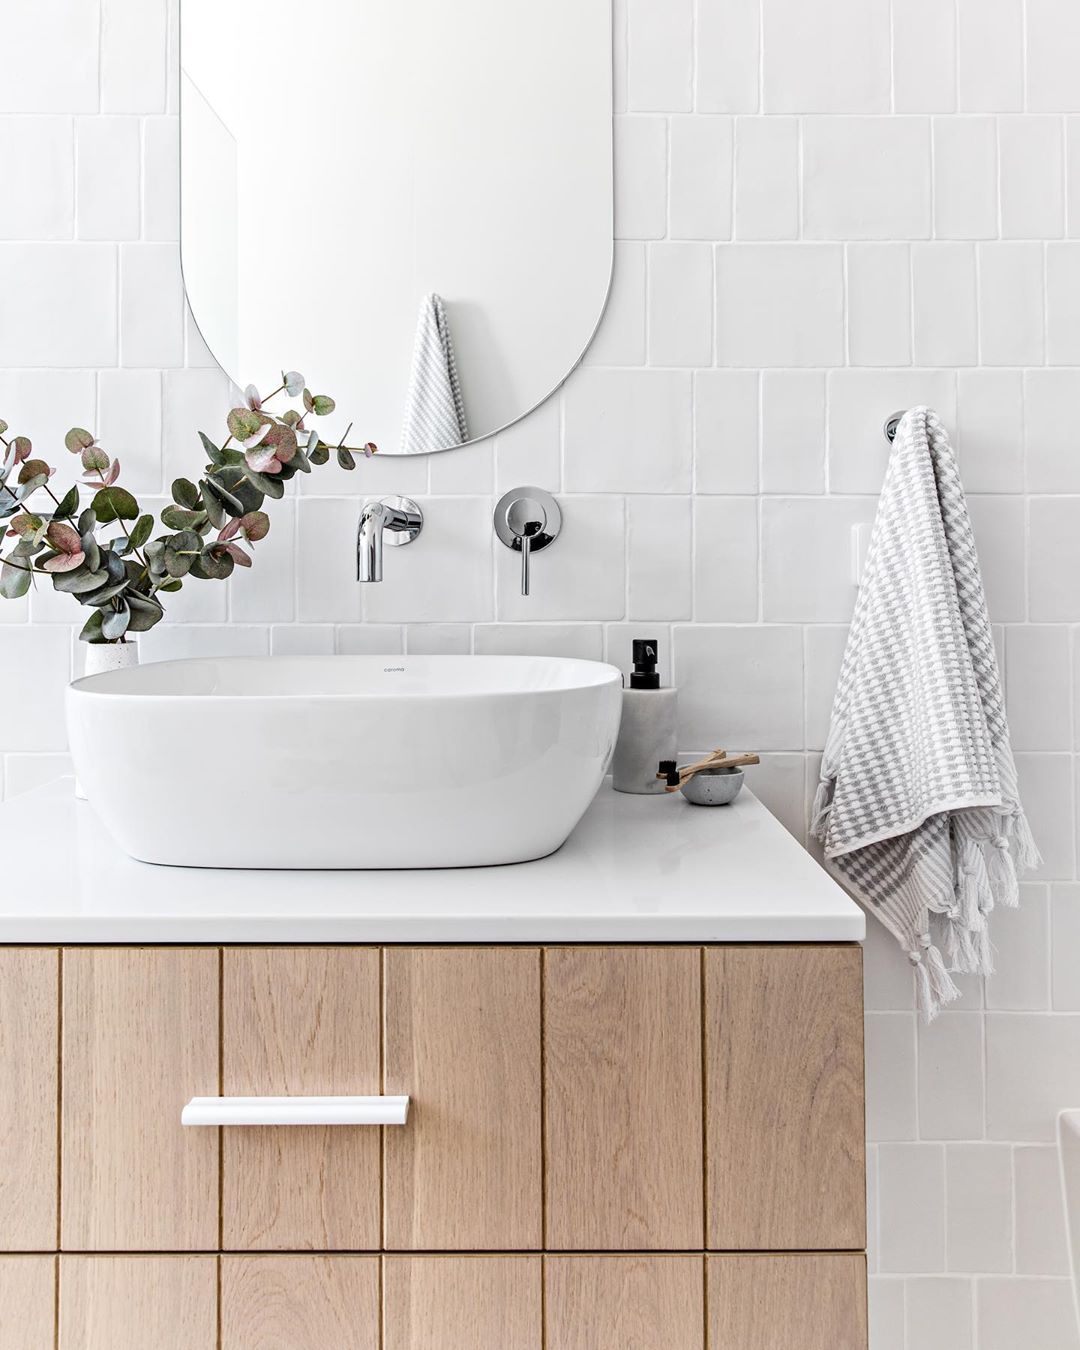 Minimalist bathroom wood vanity. Photo by Instagram user @the_stables_